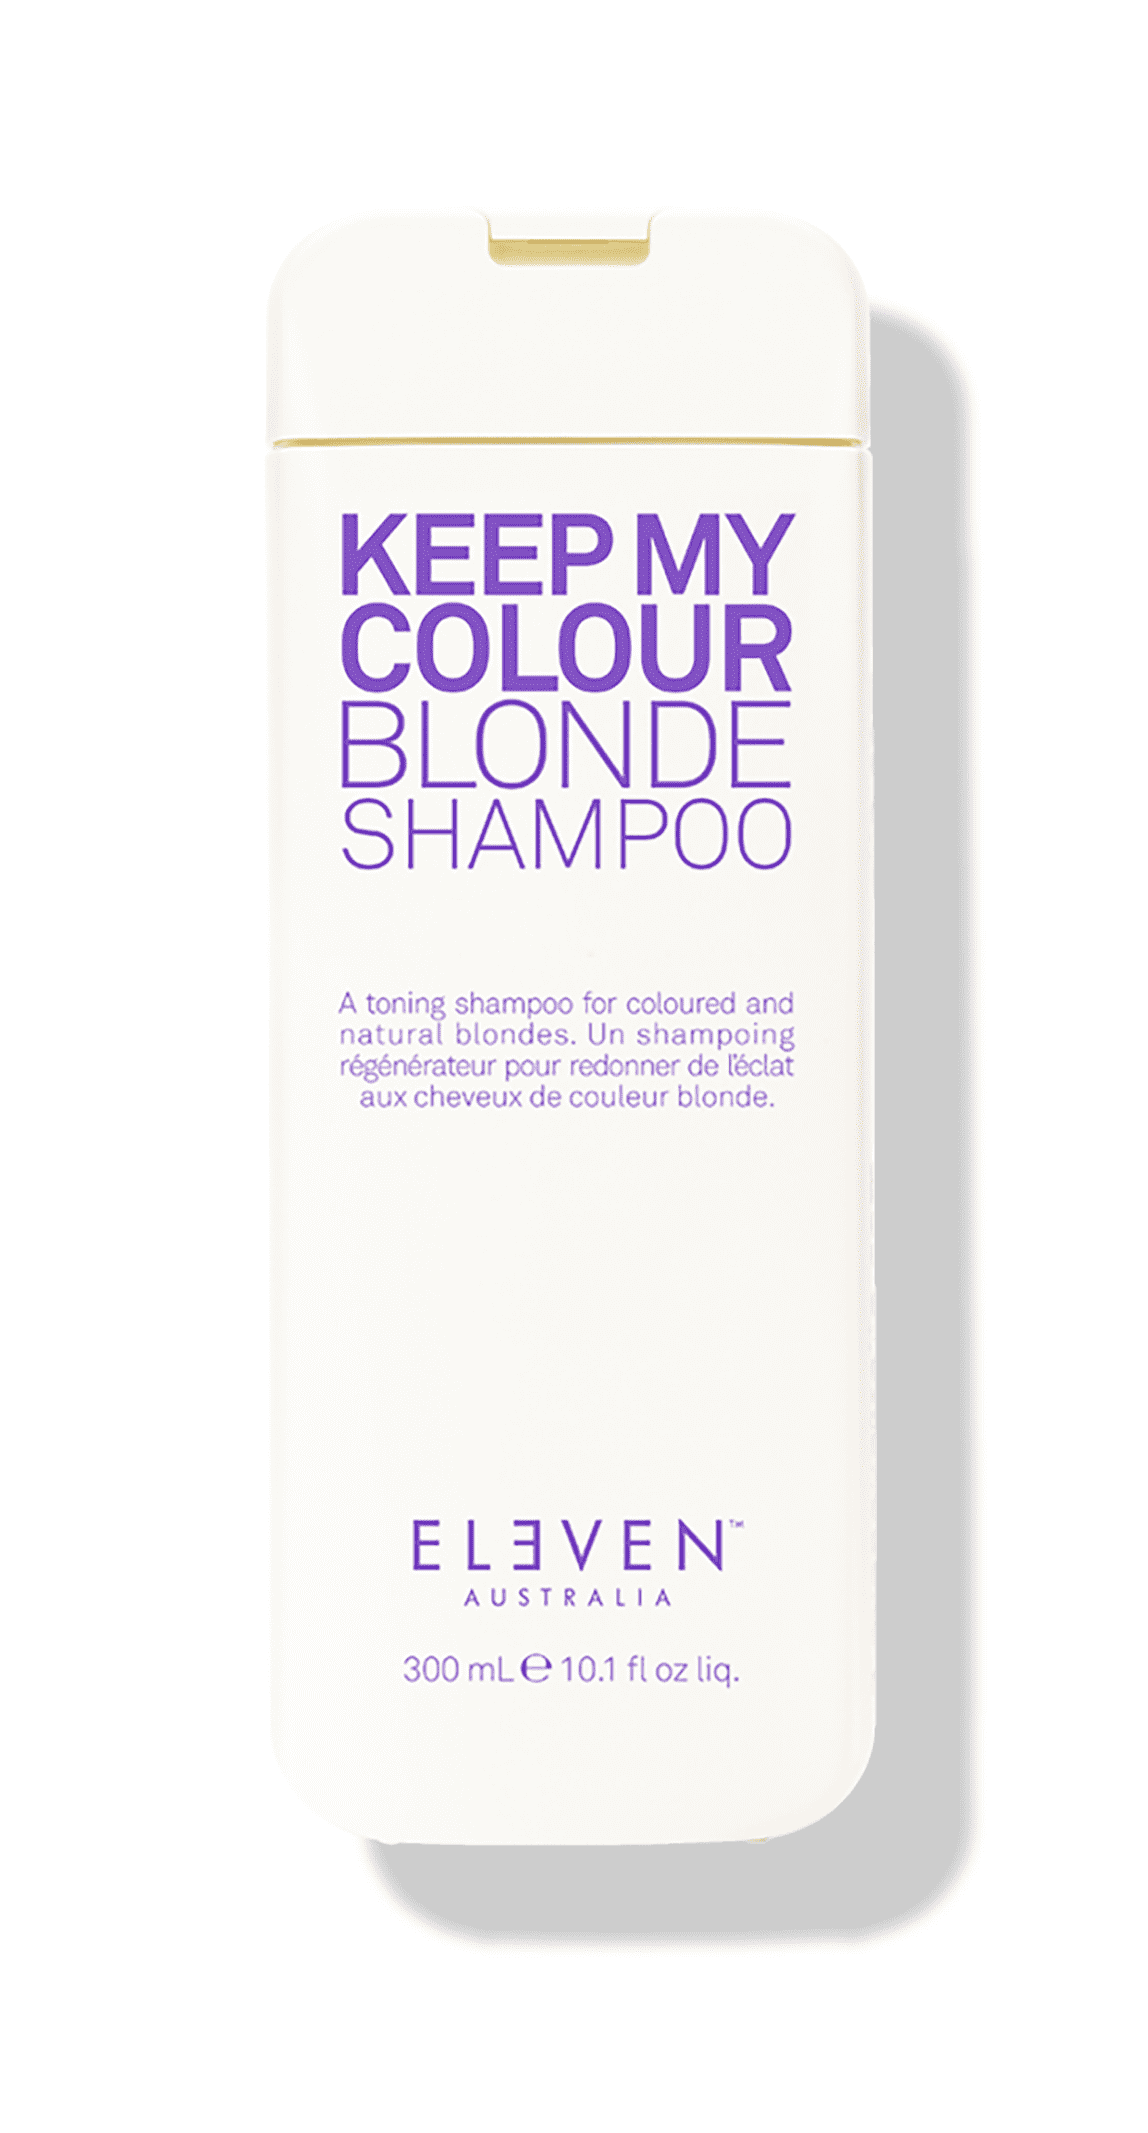 Keep My Colour Blonde Shampoo - 300ml - ELEVEN Australia